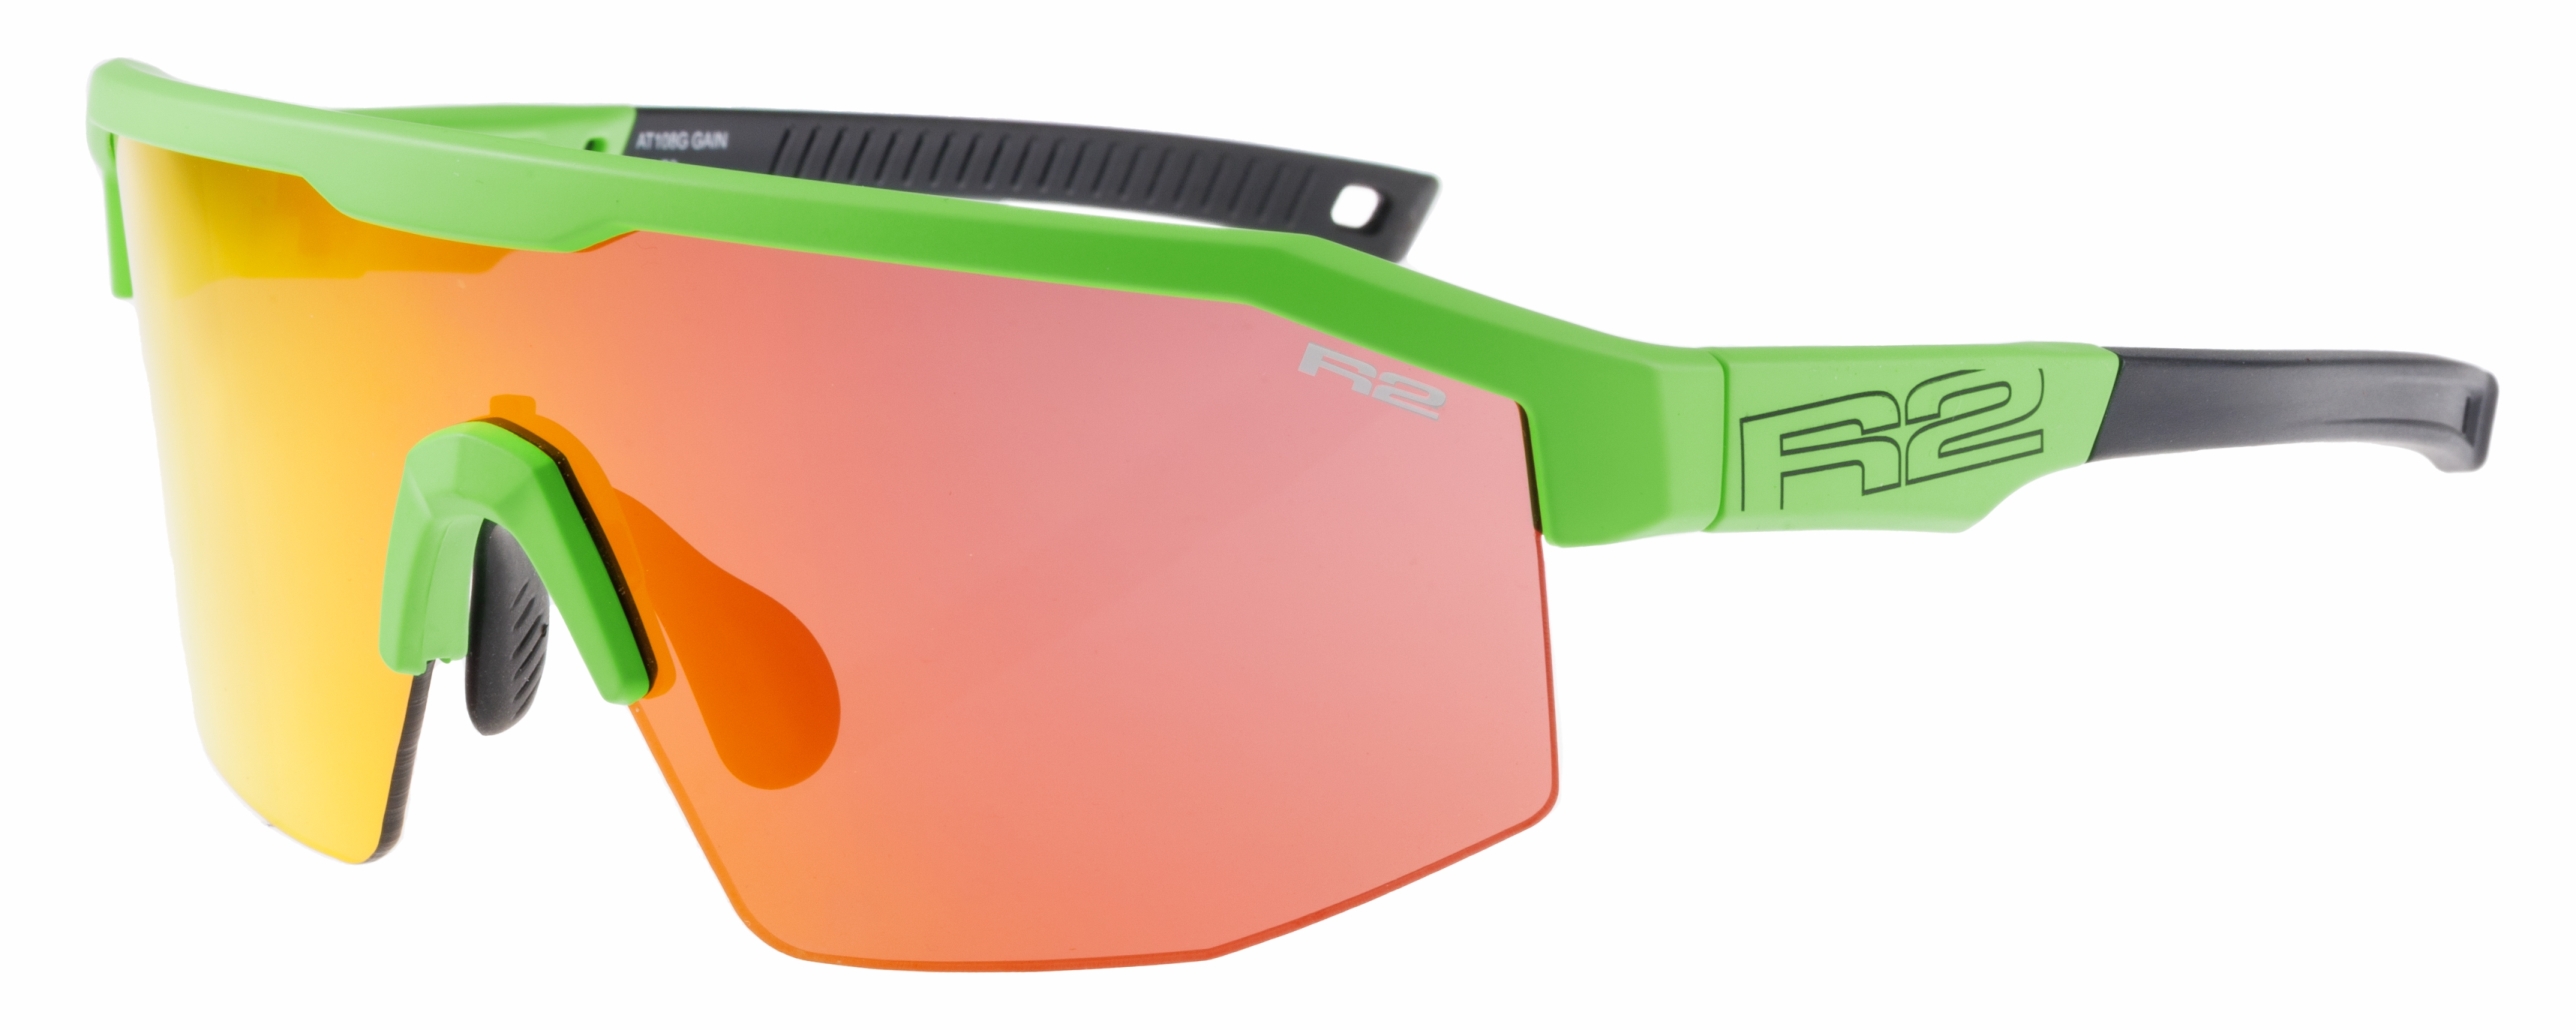 HD sport sunglasses R2 GAIN AT108G